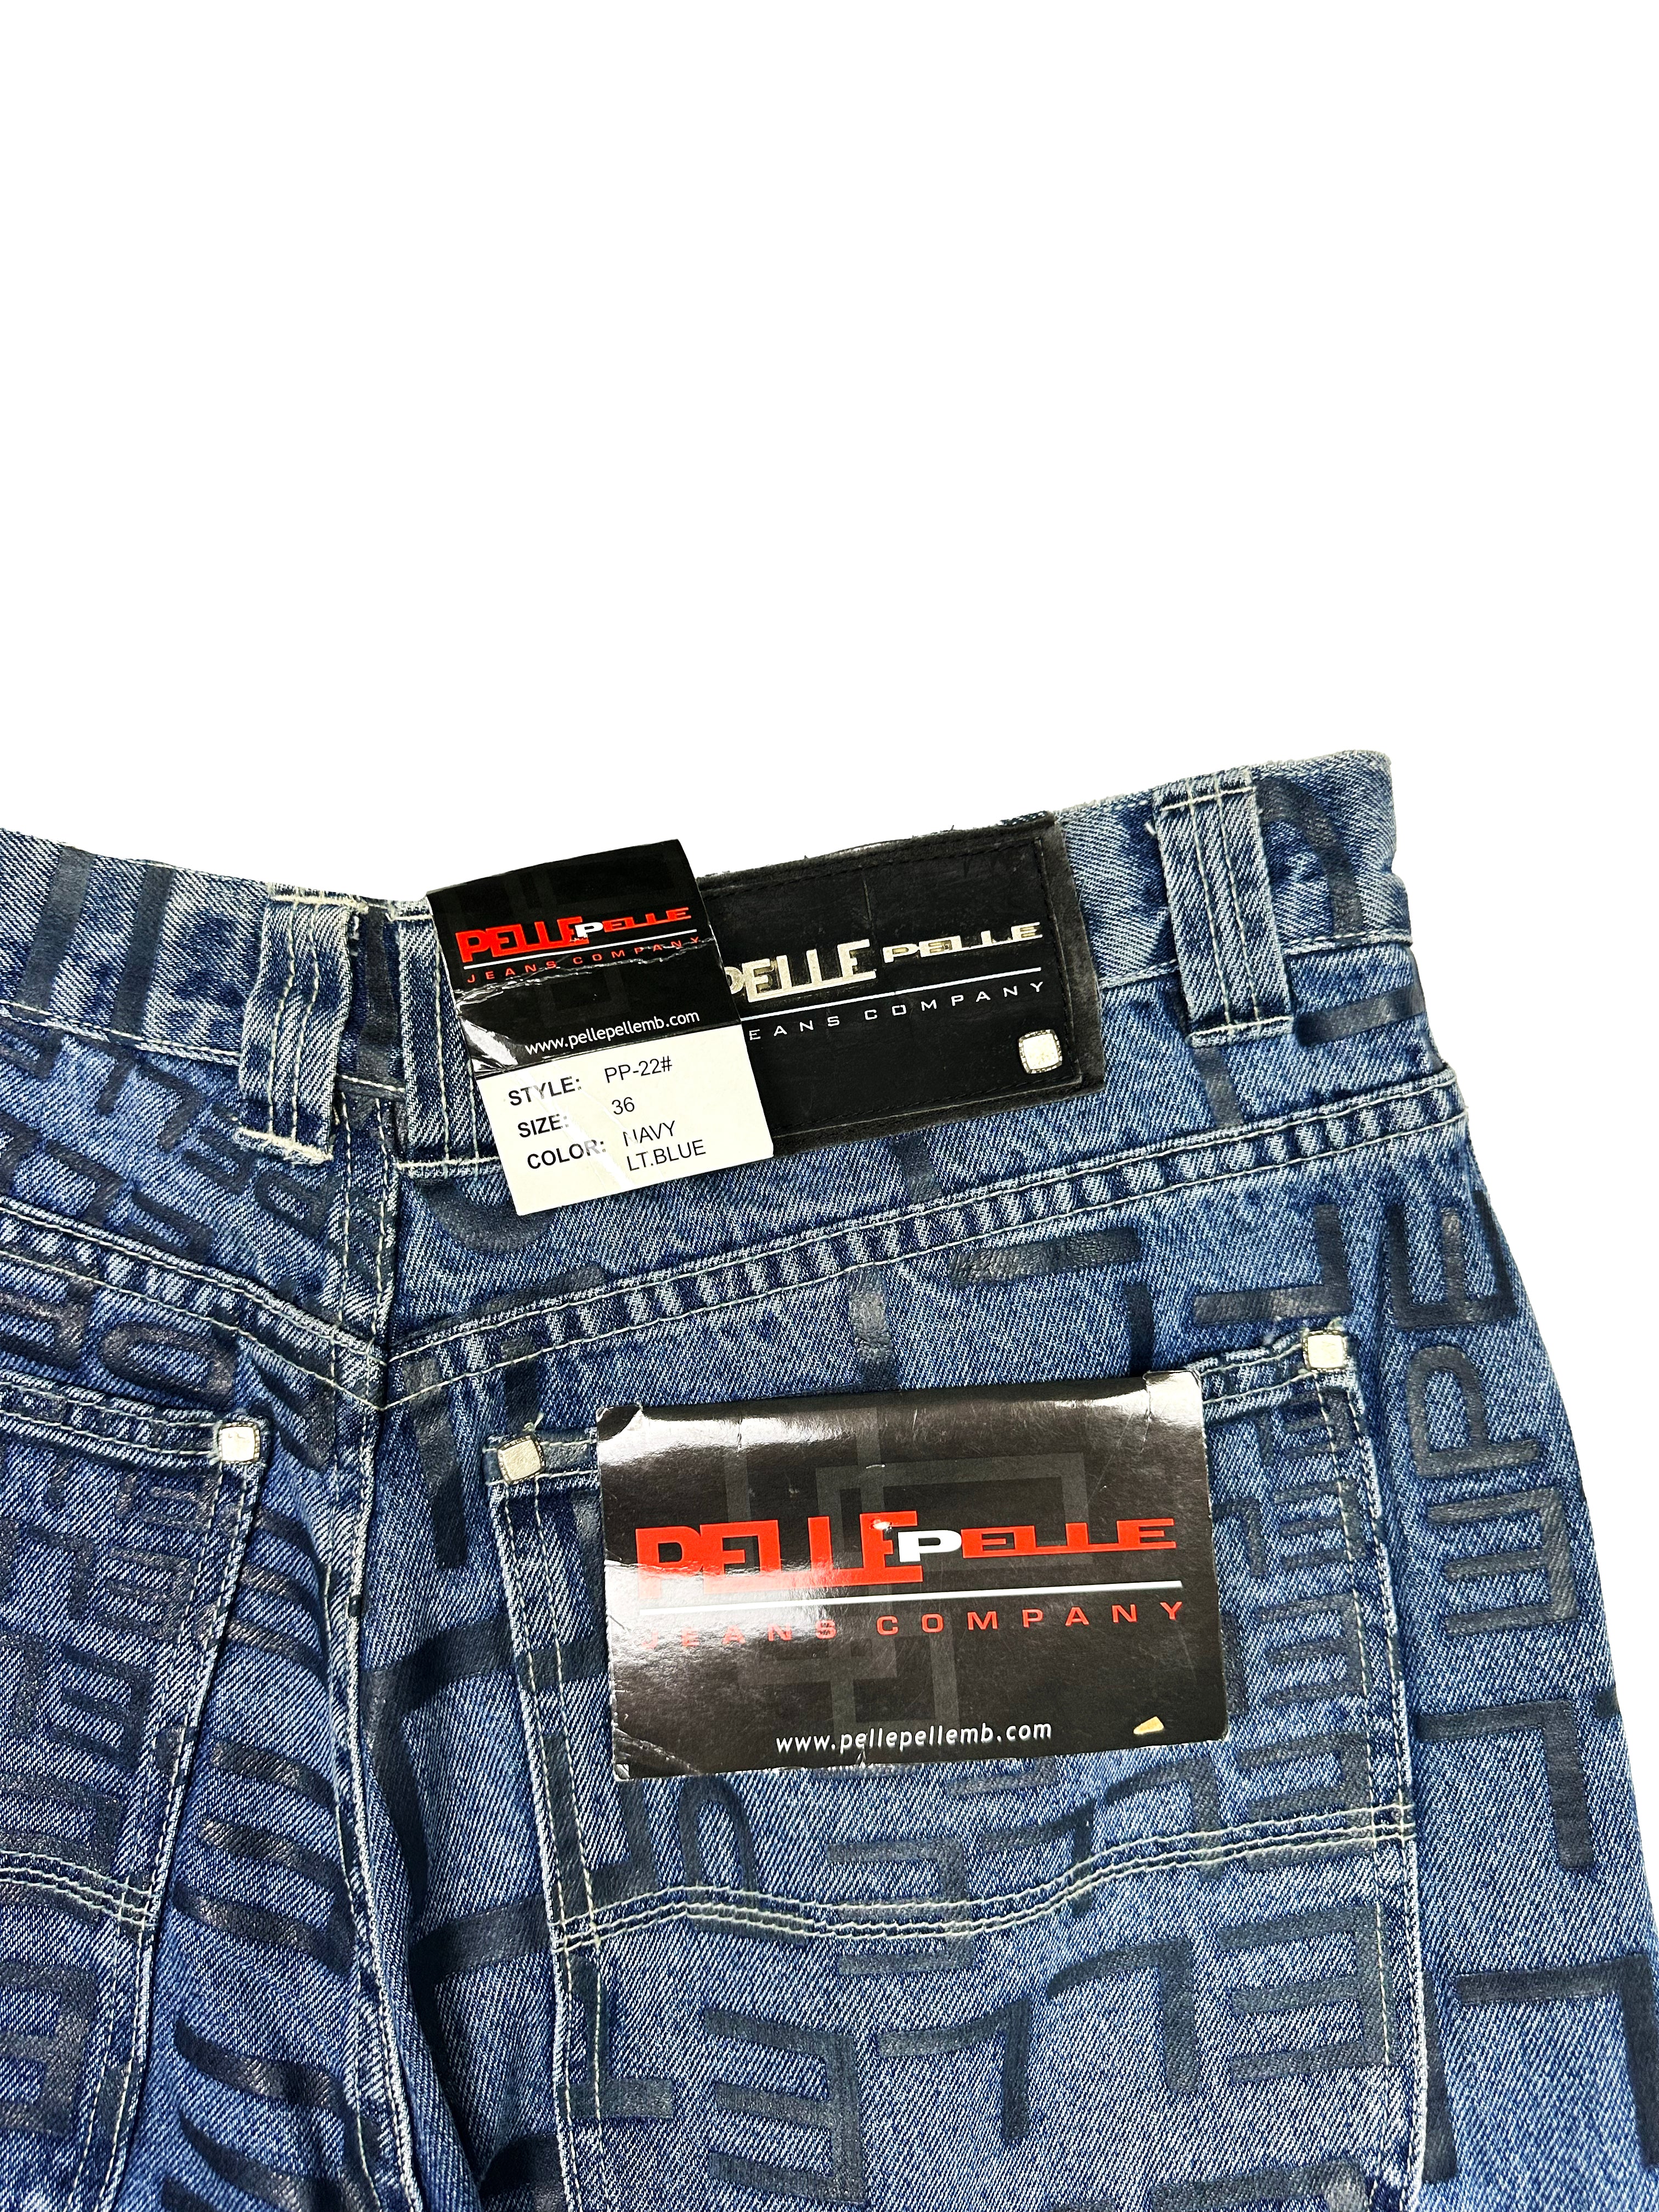 Pelle Pelle Spell Out Jeans BNWT 90's